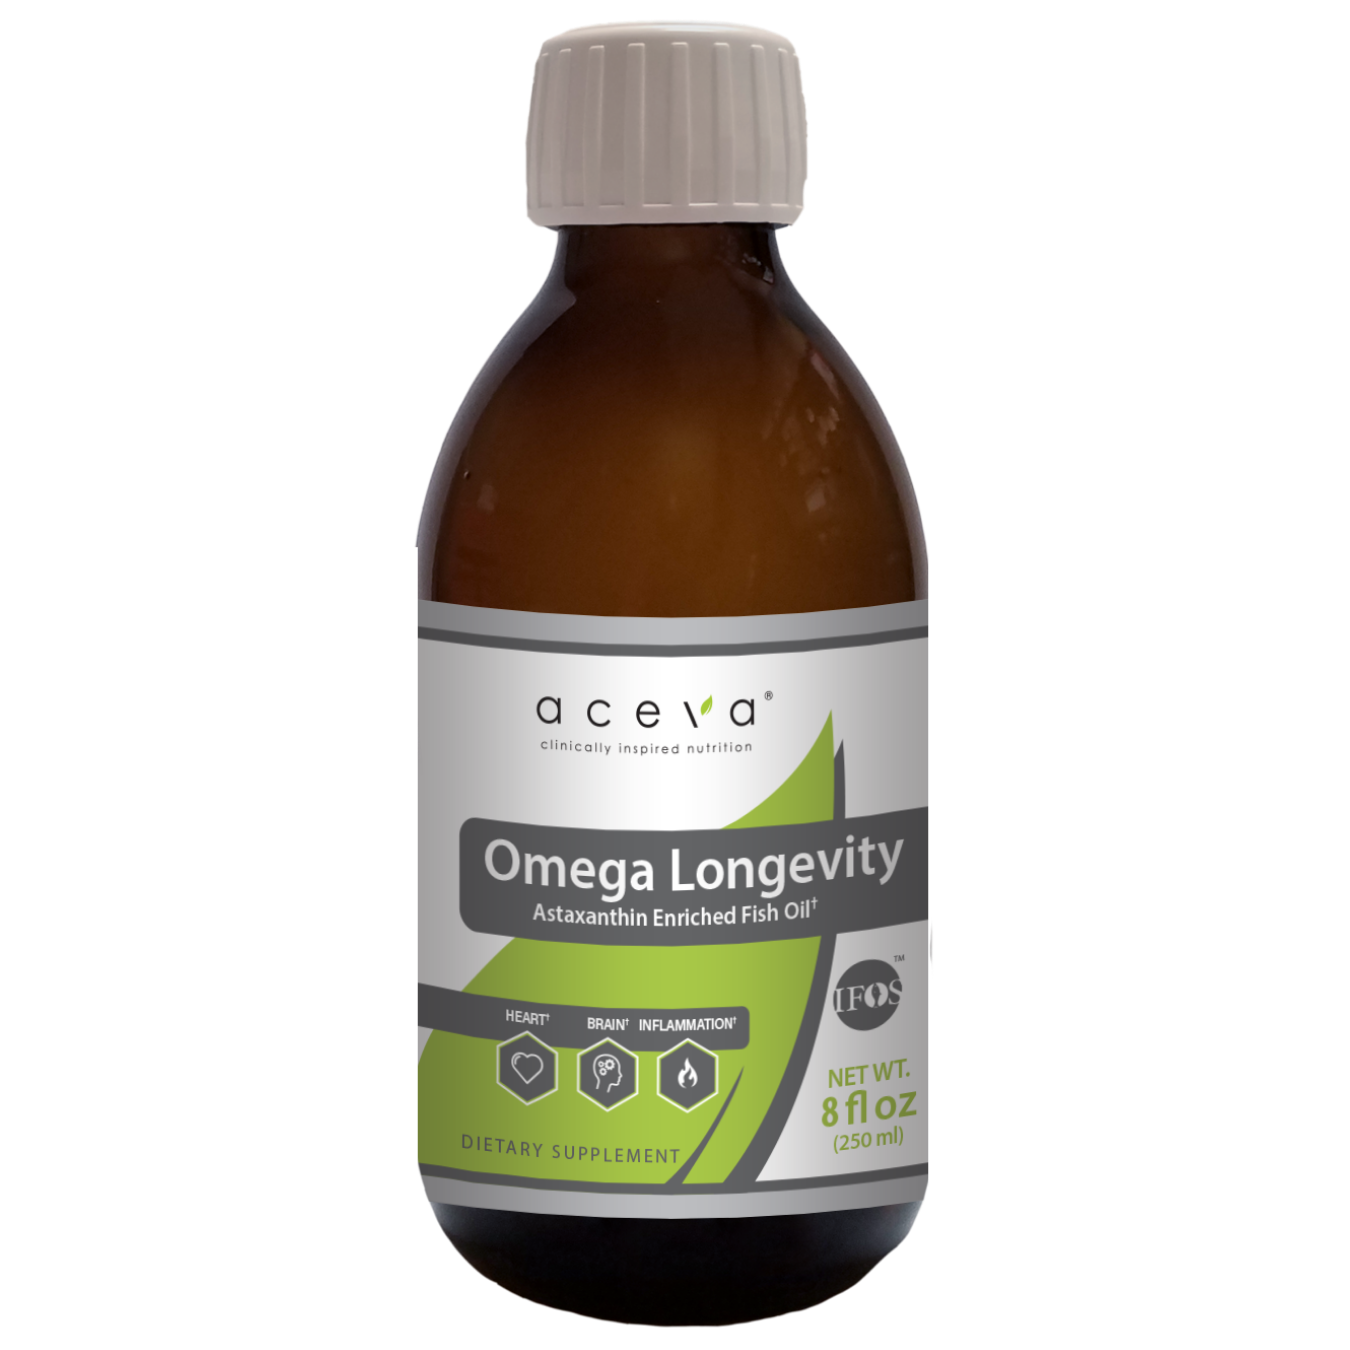 Omega Longevity